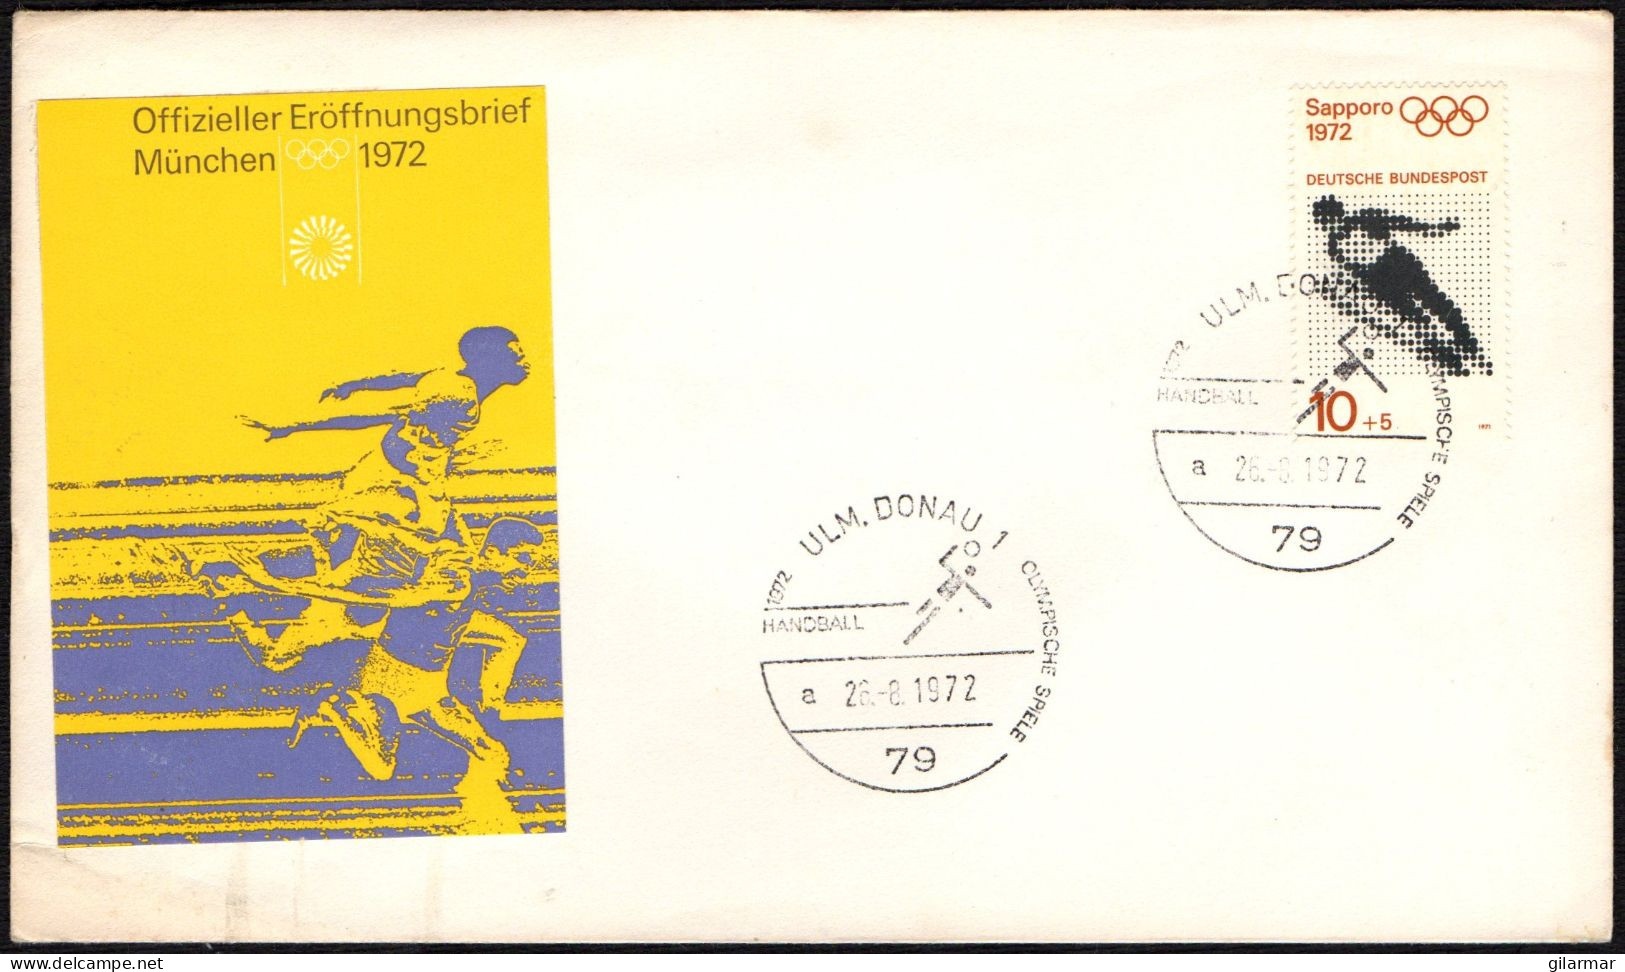 PALLAMANO - GERMANY ULM DONAU 1972 - OLYMPIC GAMES MUNICH 1972 - HANDBALL - M - Handbal